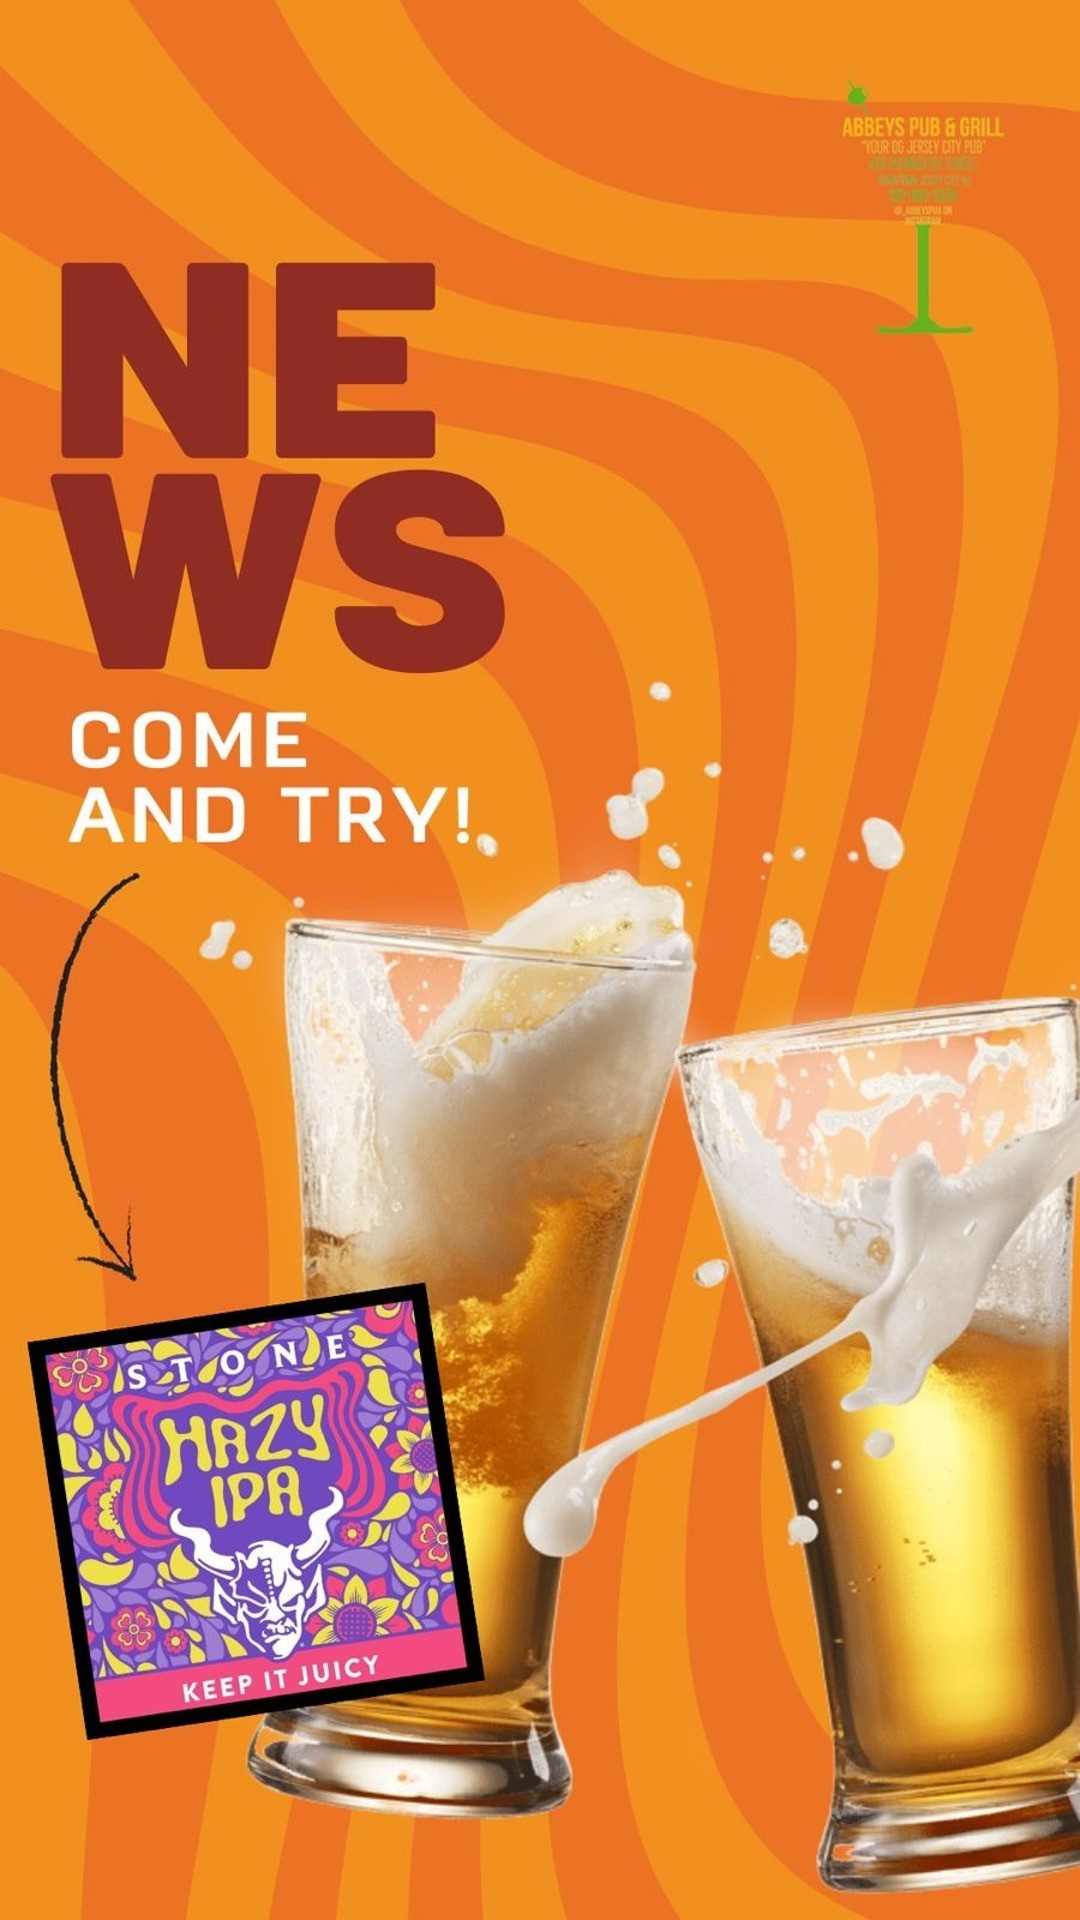 #Liquid #Fluid #Orange #Font #Poster #Advertising #Art #Drink #Drinkware #Publication